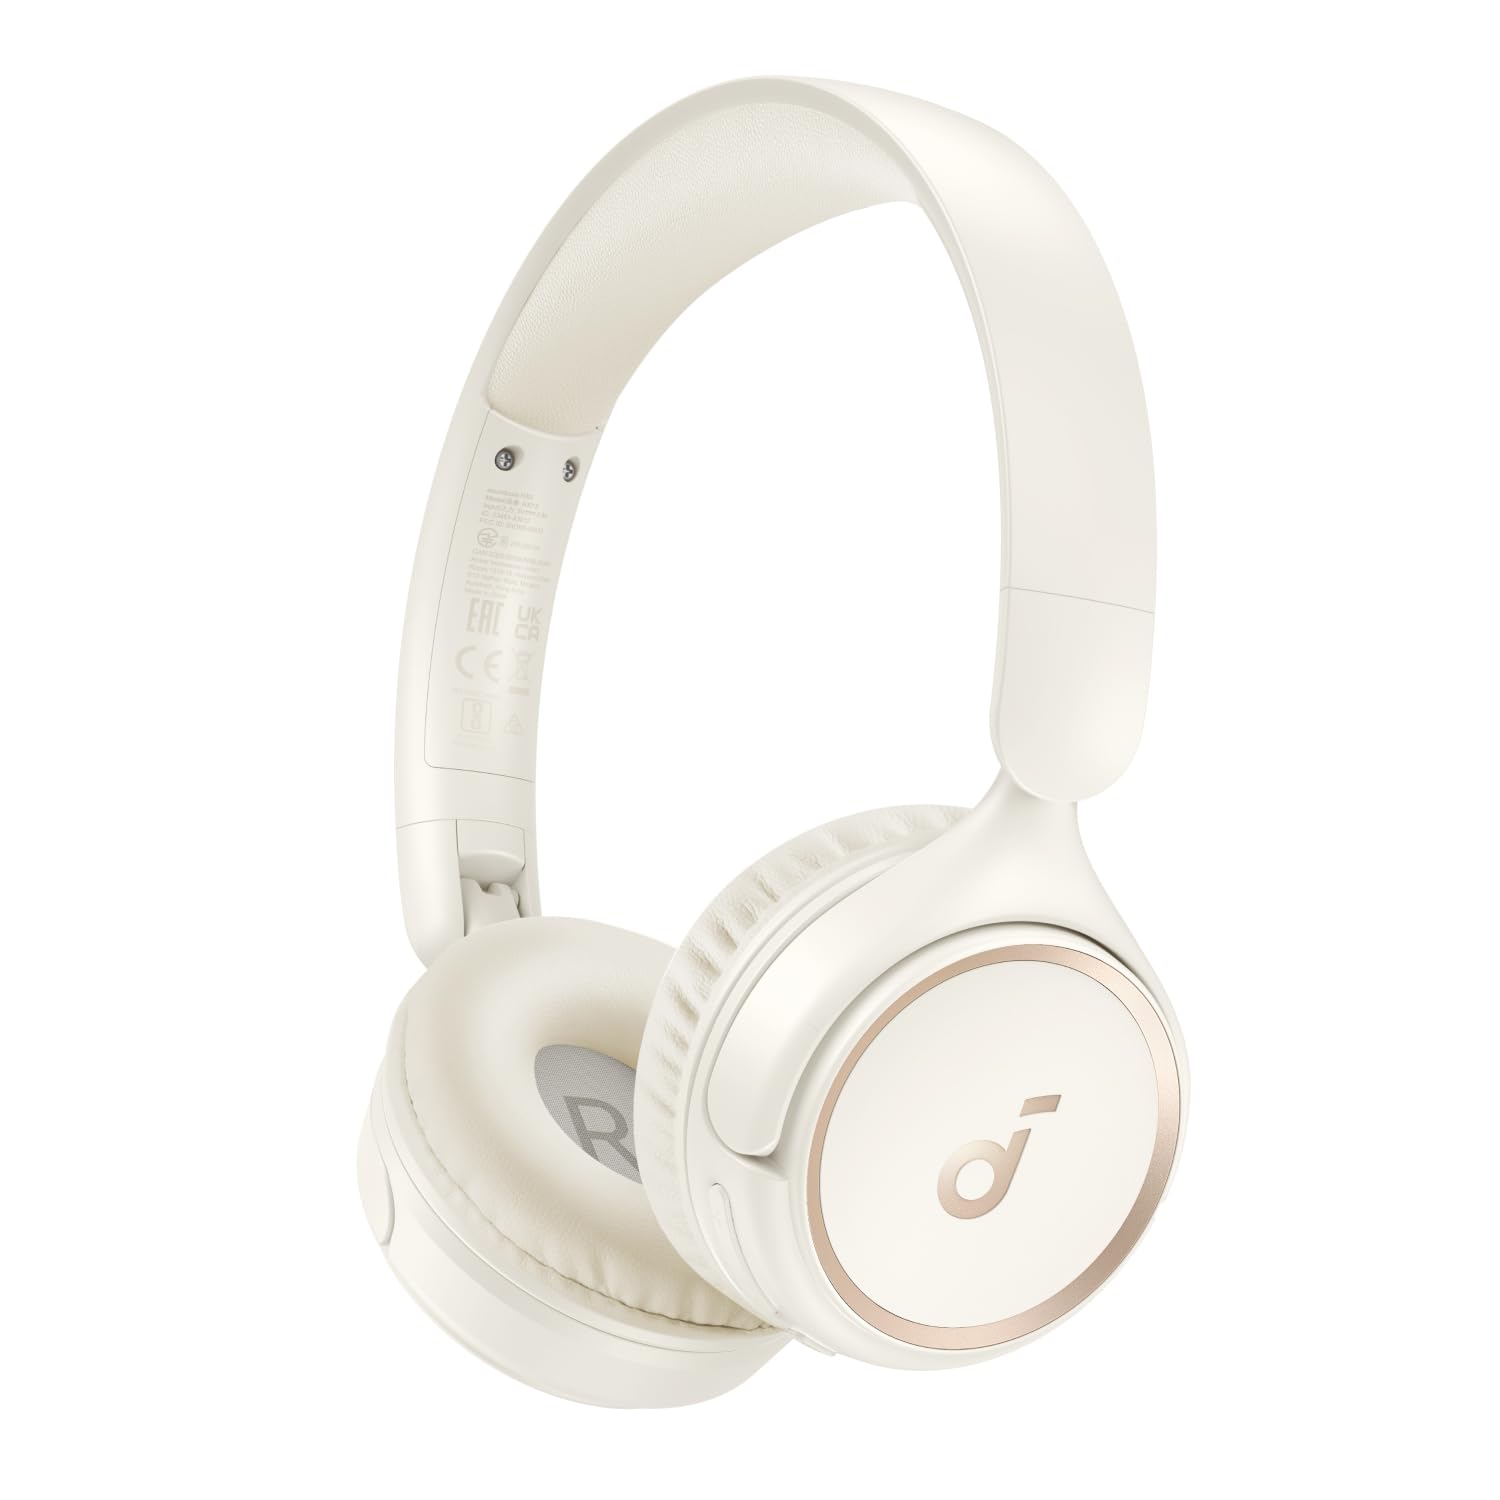 Soundcore H30i Wireless On-Ear Headphones $29.99